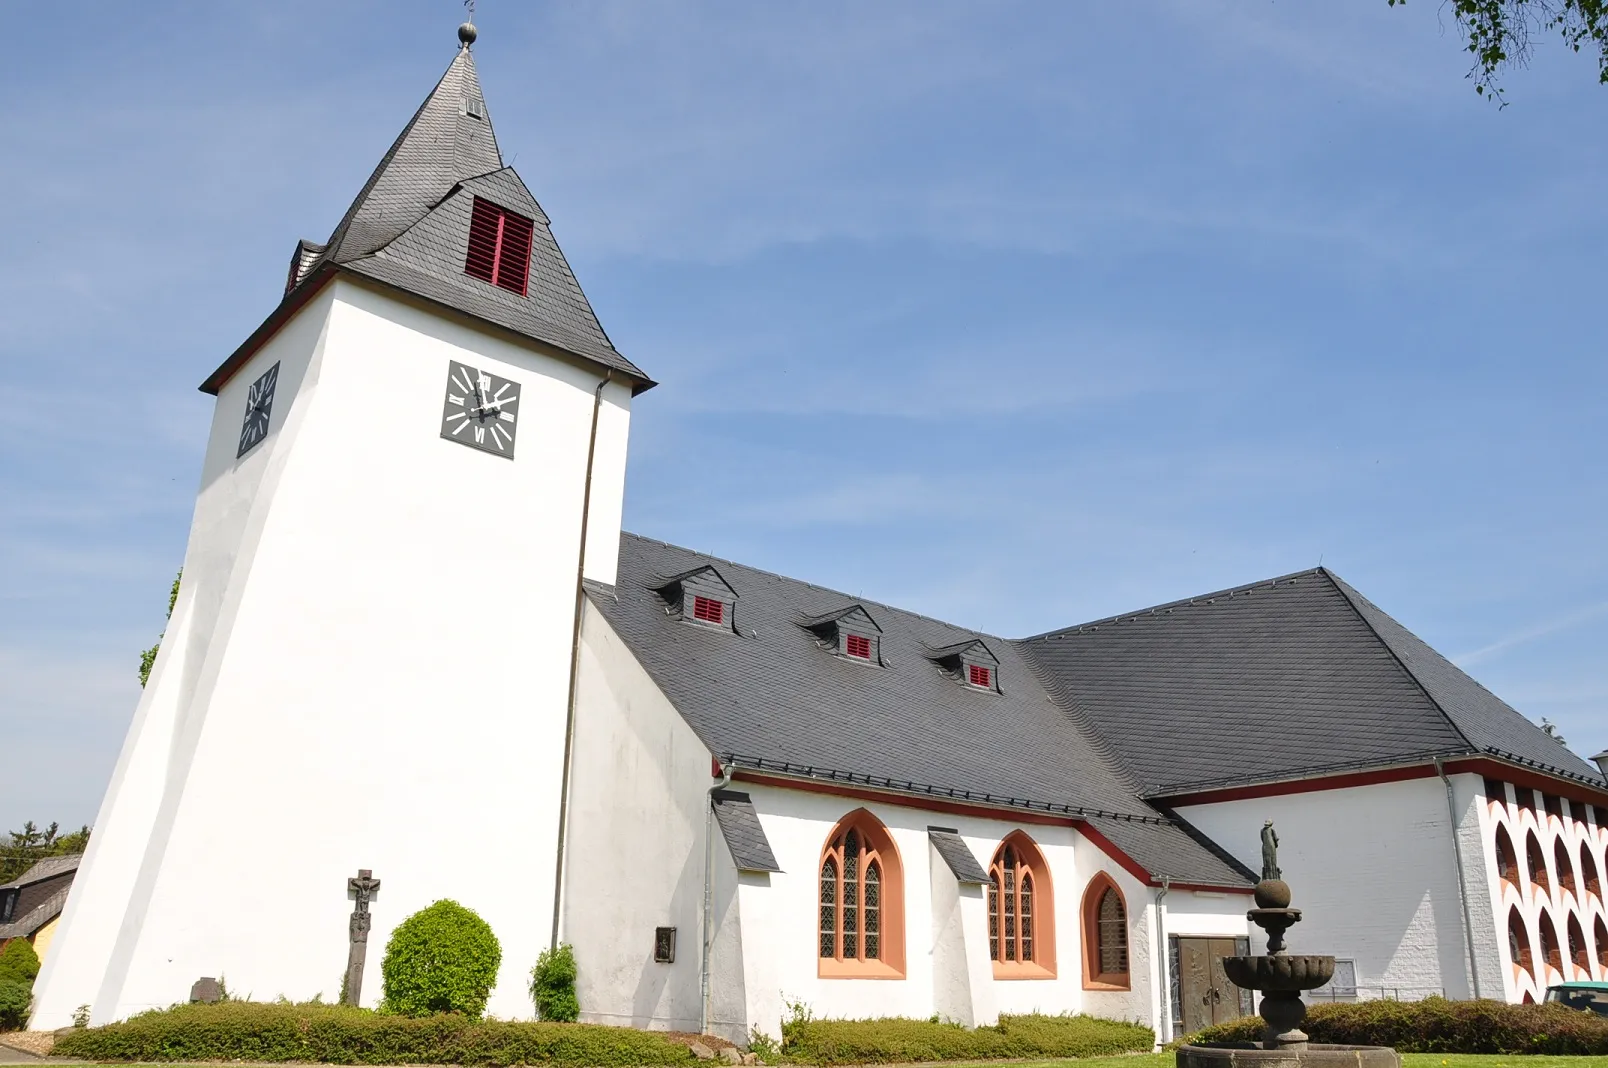 Photo showing: The Saint Vincent’s and Saint Nicholas’s Catholic Parish Church of Kelberg, Rhineland-Palatinate (Eifel), Germany.